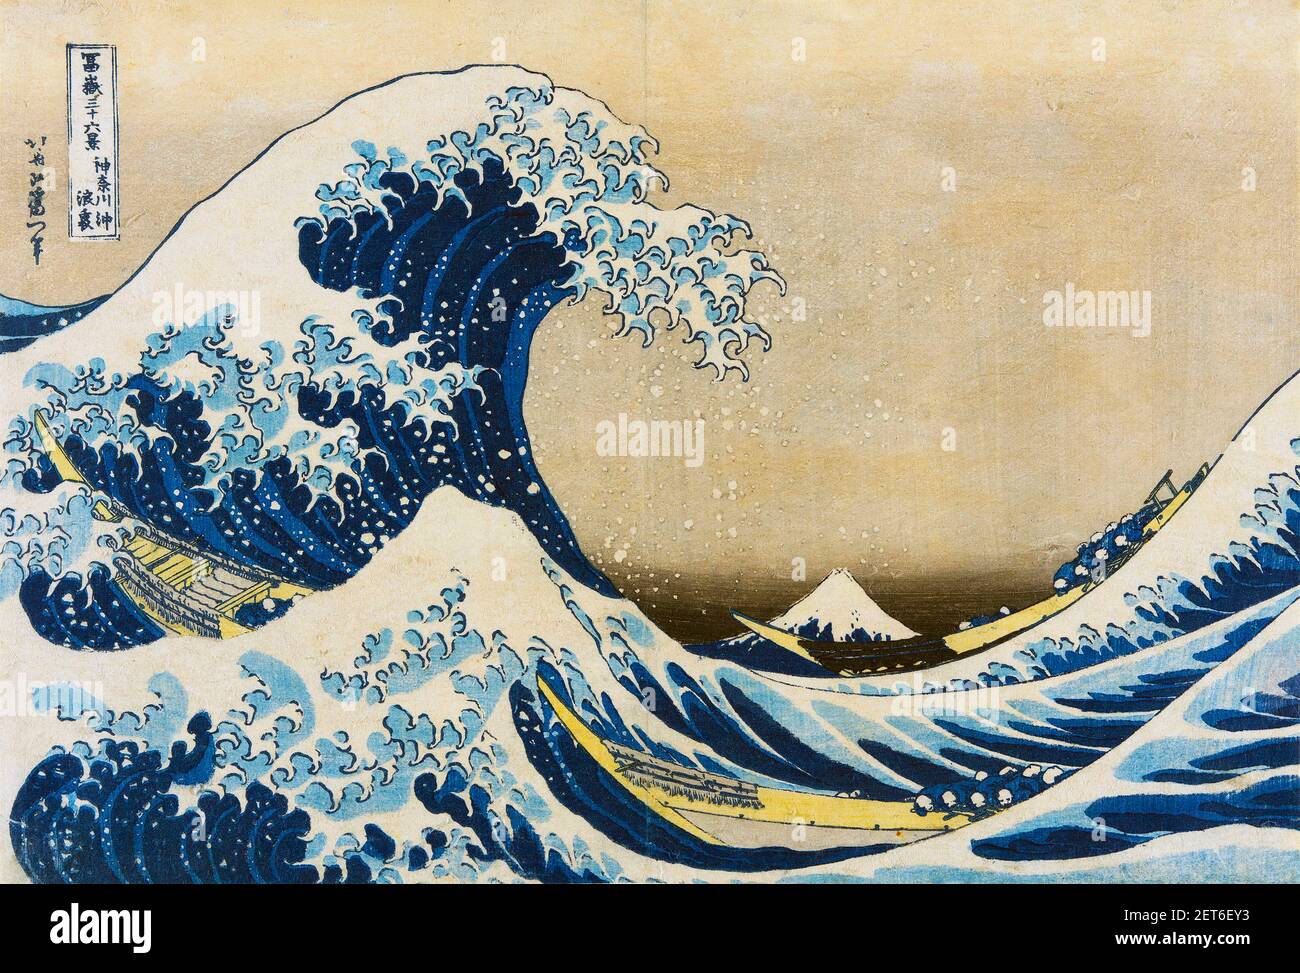 Hokusai. The Great Wave off Kanagawa by the Japanese artist and printmaker, Katsushika Hokusai (葛飾 北斎, c. 1760-1849), color woodblock print, c. 1830 from the series Thirty-six Views of Mount Fuji Stock Photo